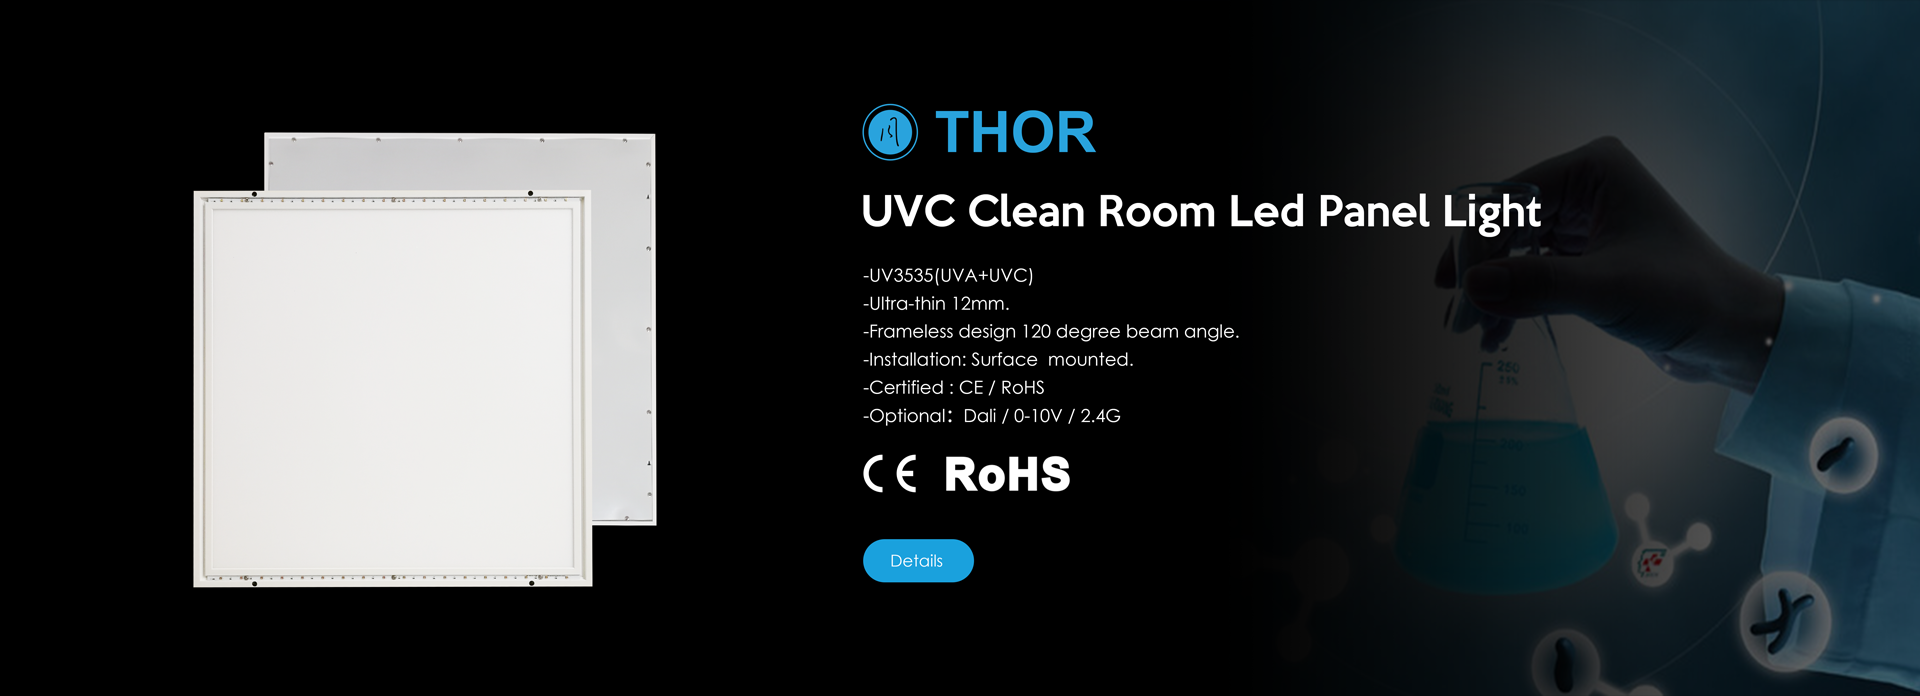 UVC Clean Room?Led?Panel?Light (Thor)